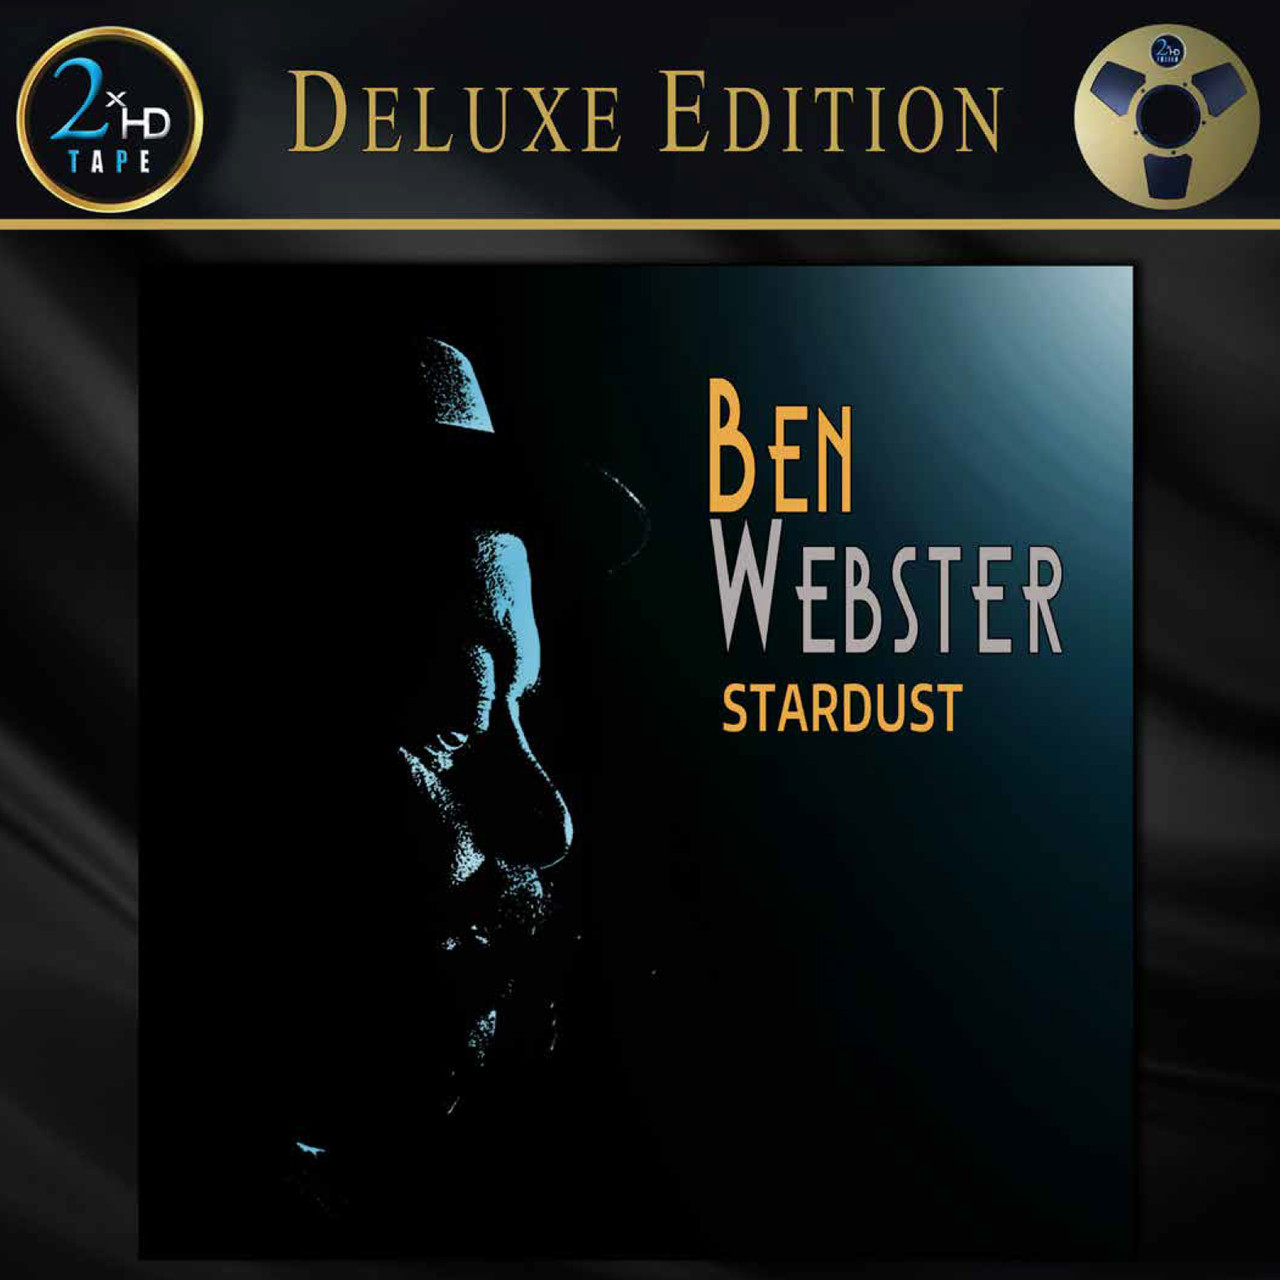 Ben Webster Stardust Limited Edition Master Quality Reel to Reel (2 Reels)